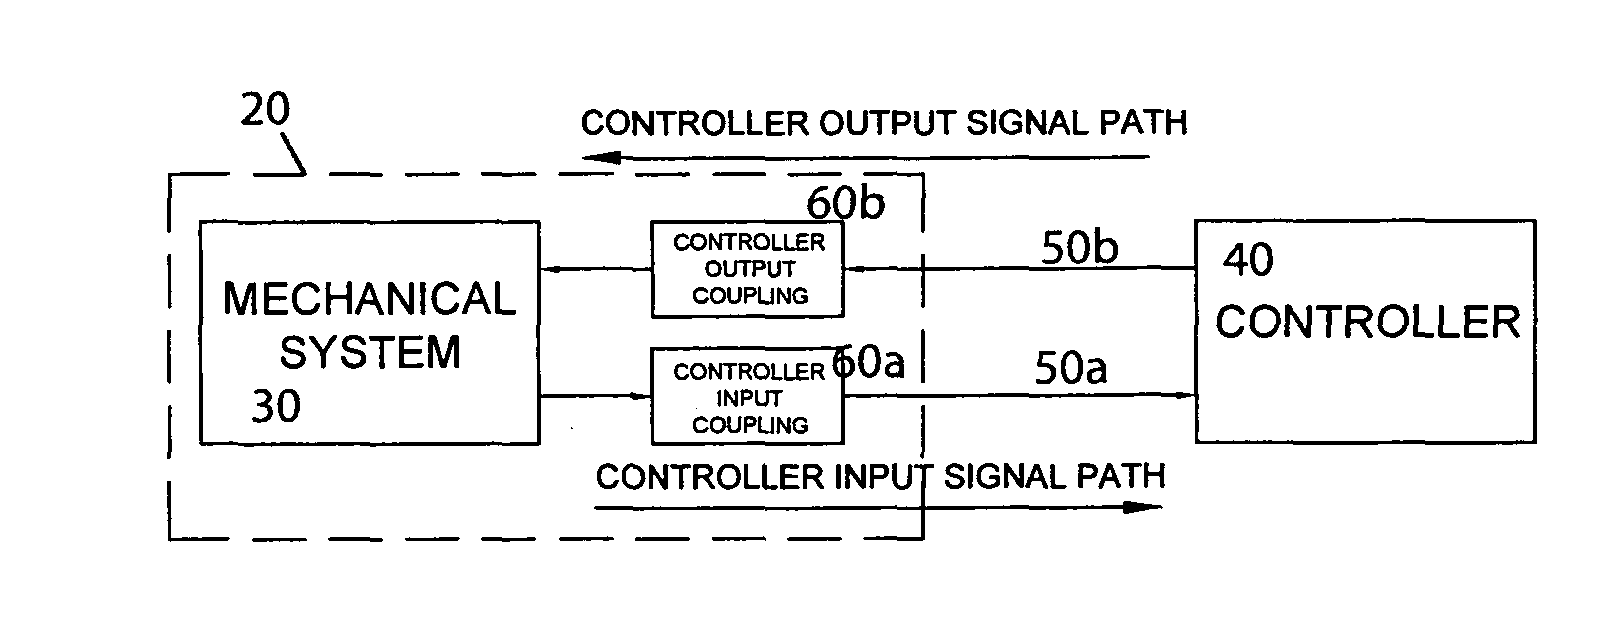 Mechanical oscillator